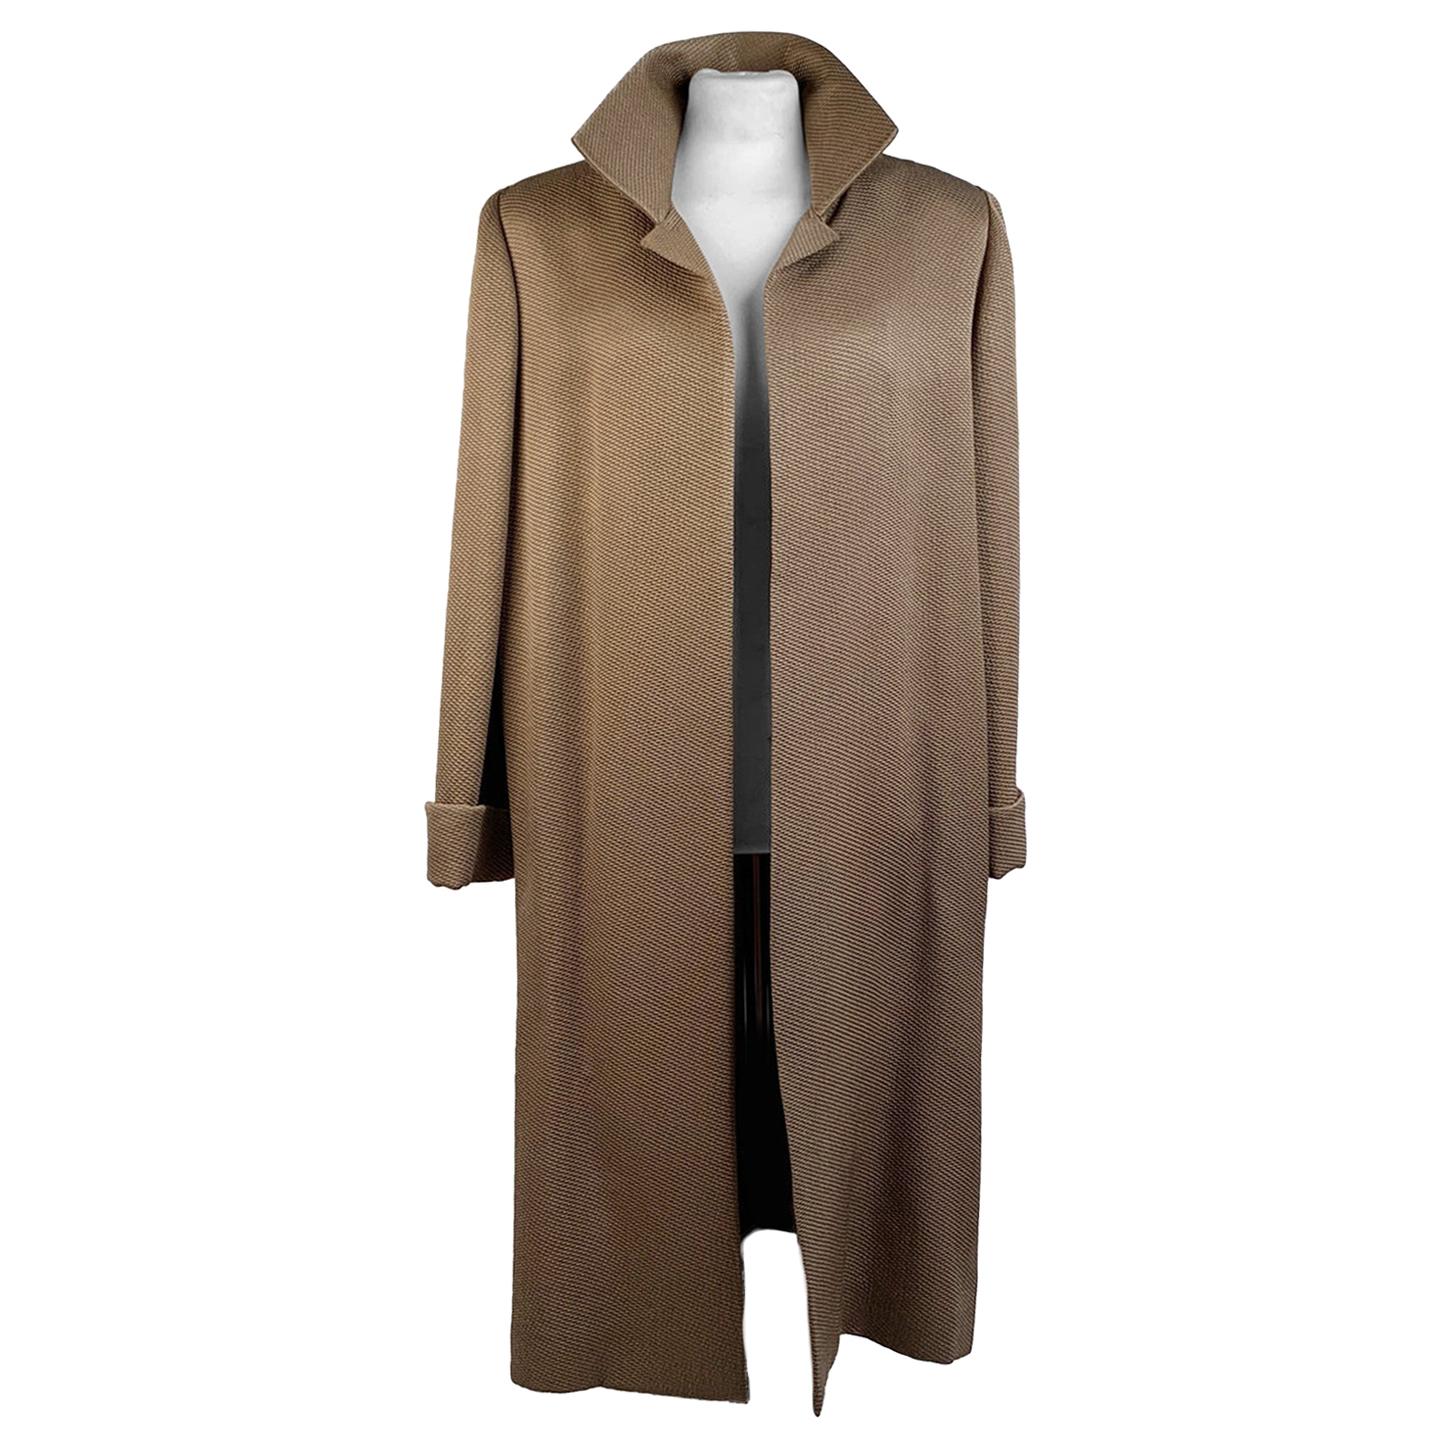 Galitzine Couture Vintage Light Brown Dustcoat Open Front Coat